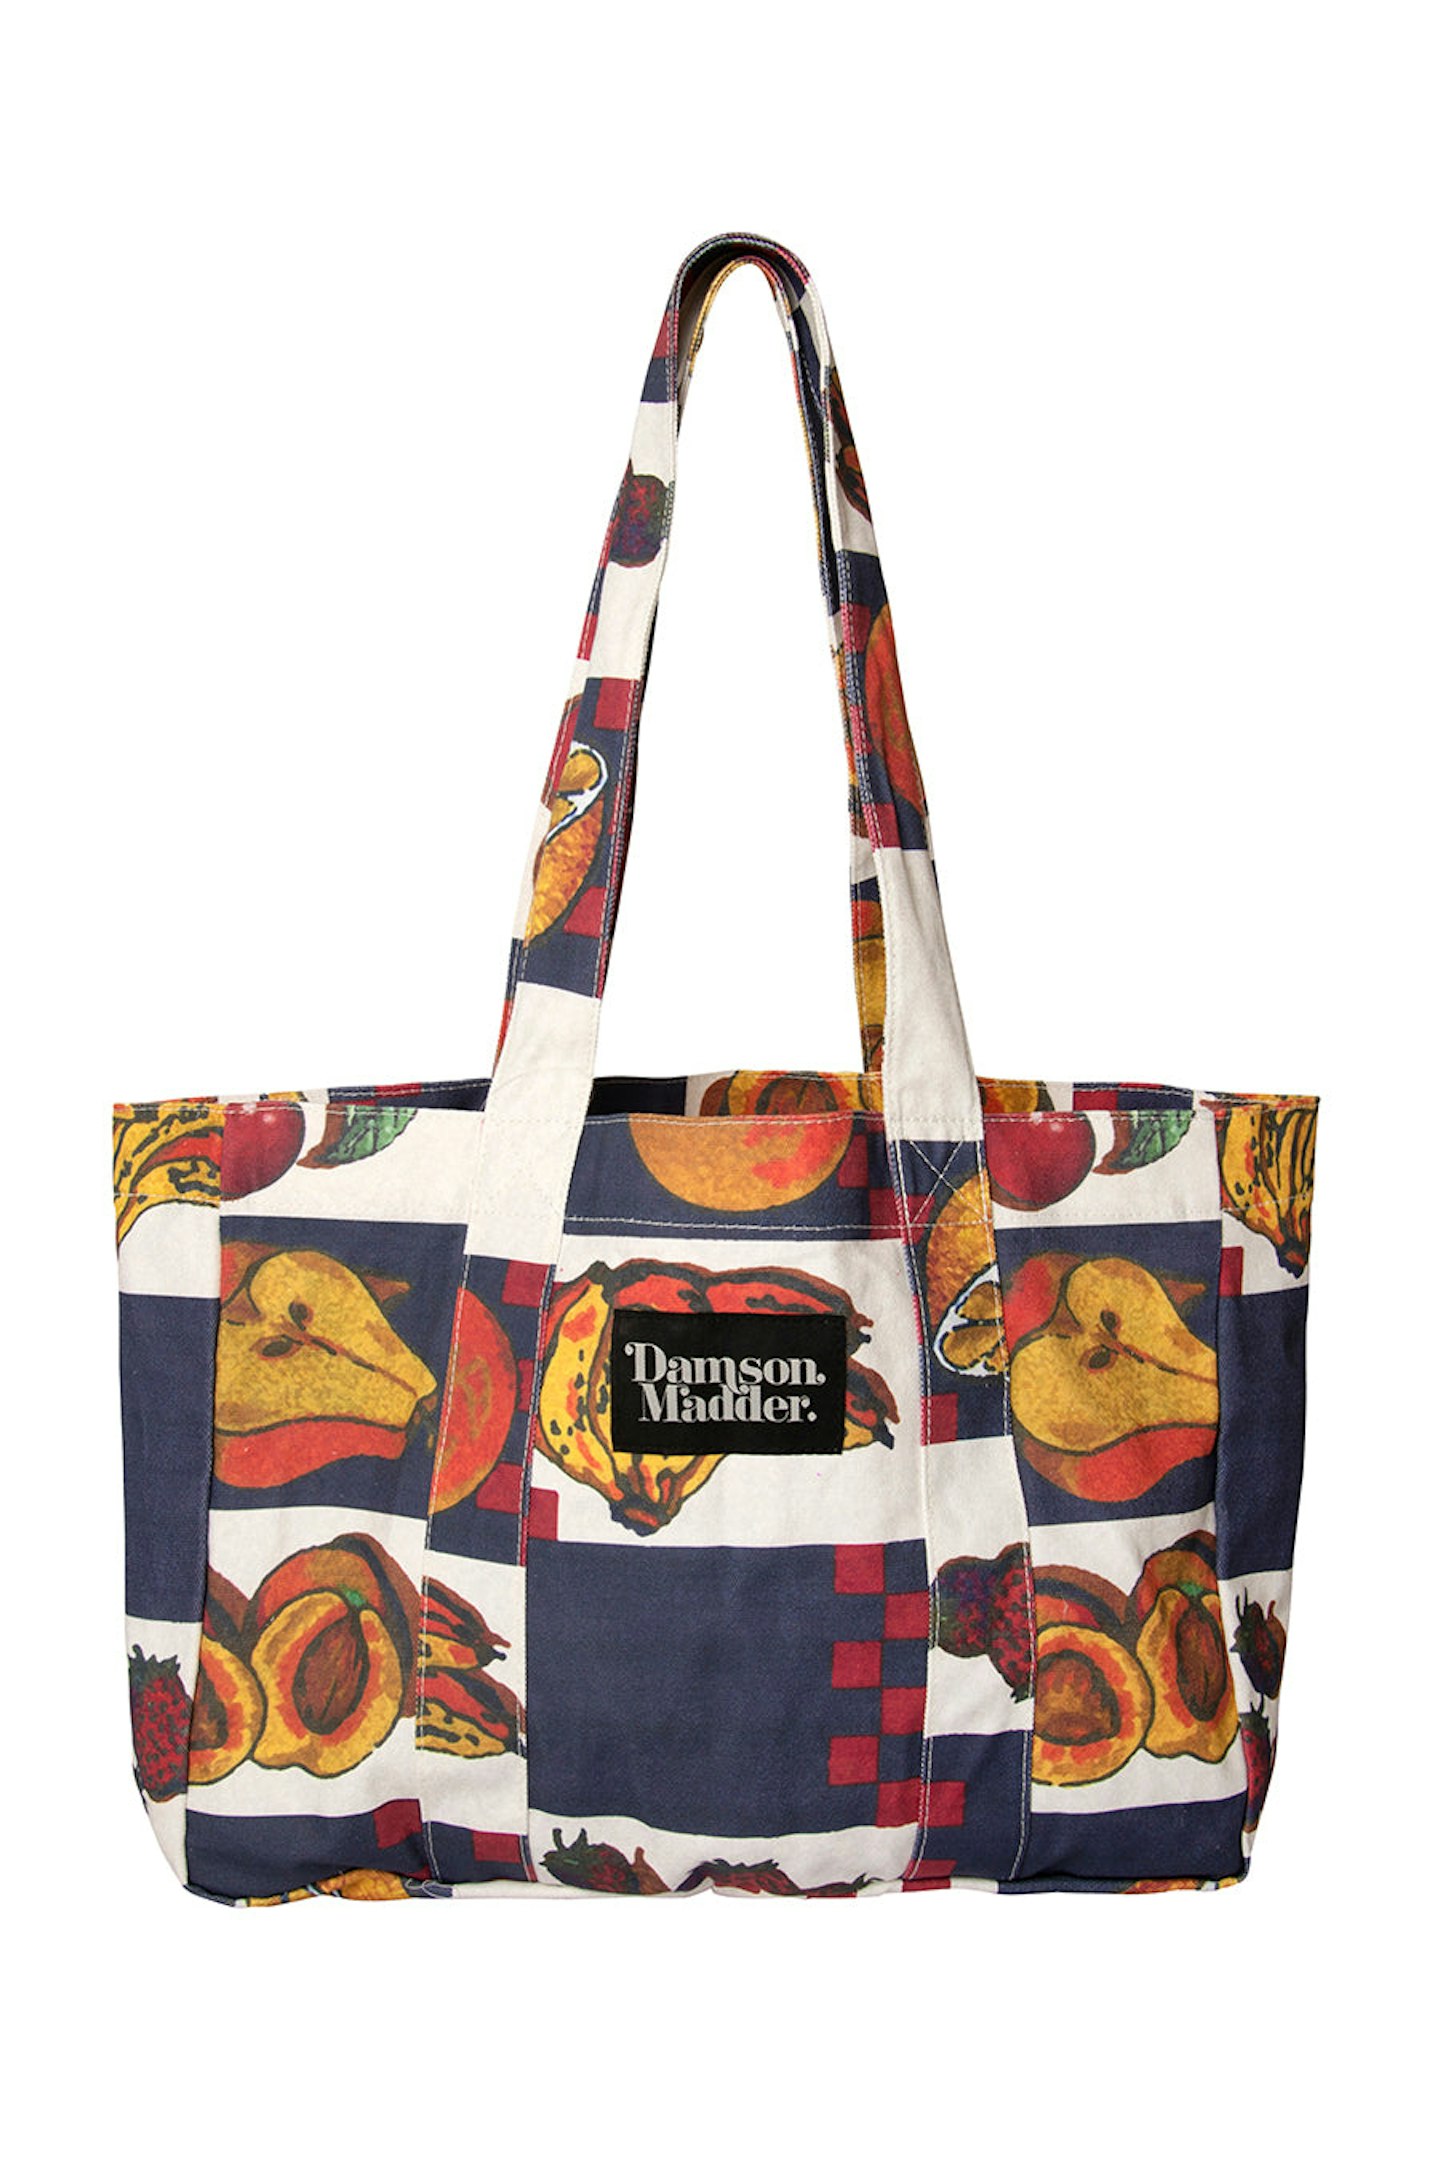 lunchtime shop Thursday - Damson Madder, Oversized Fruit Tote Bag, £35